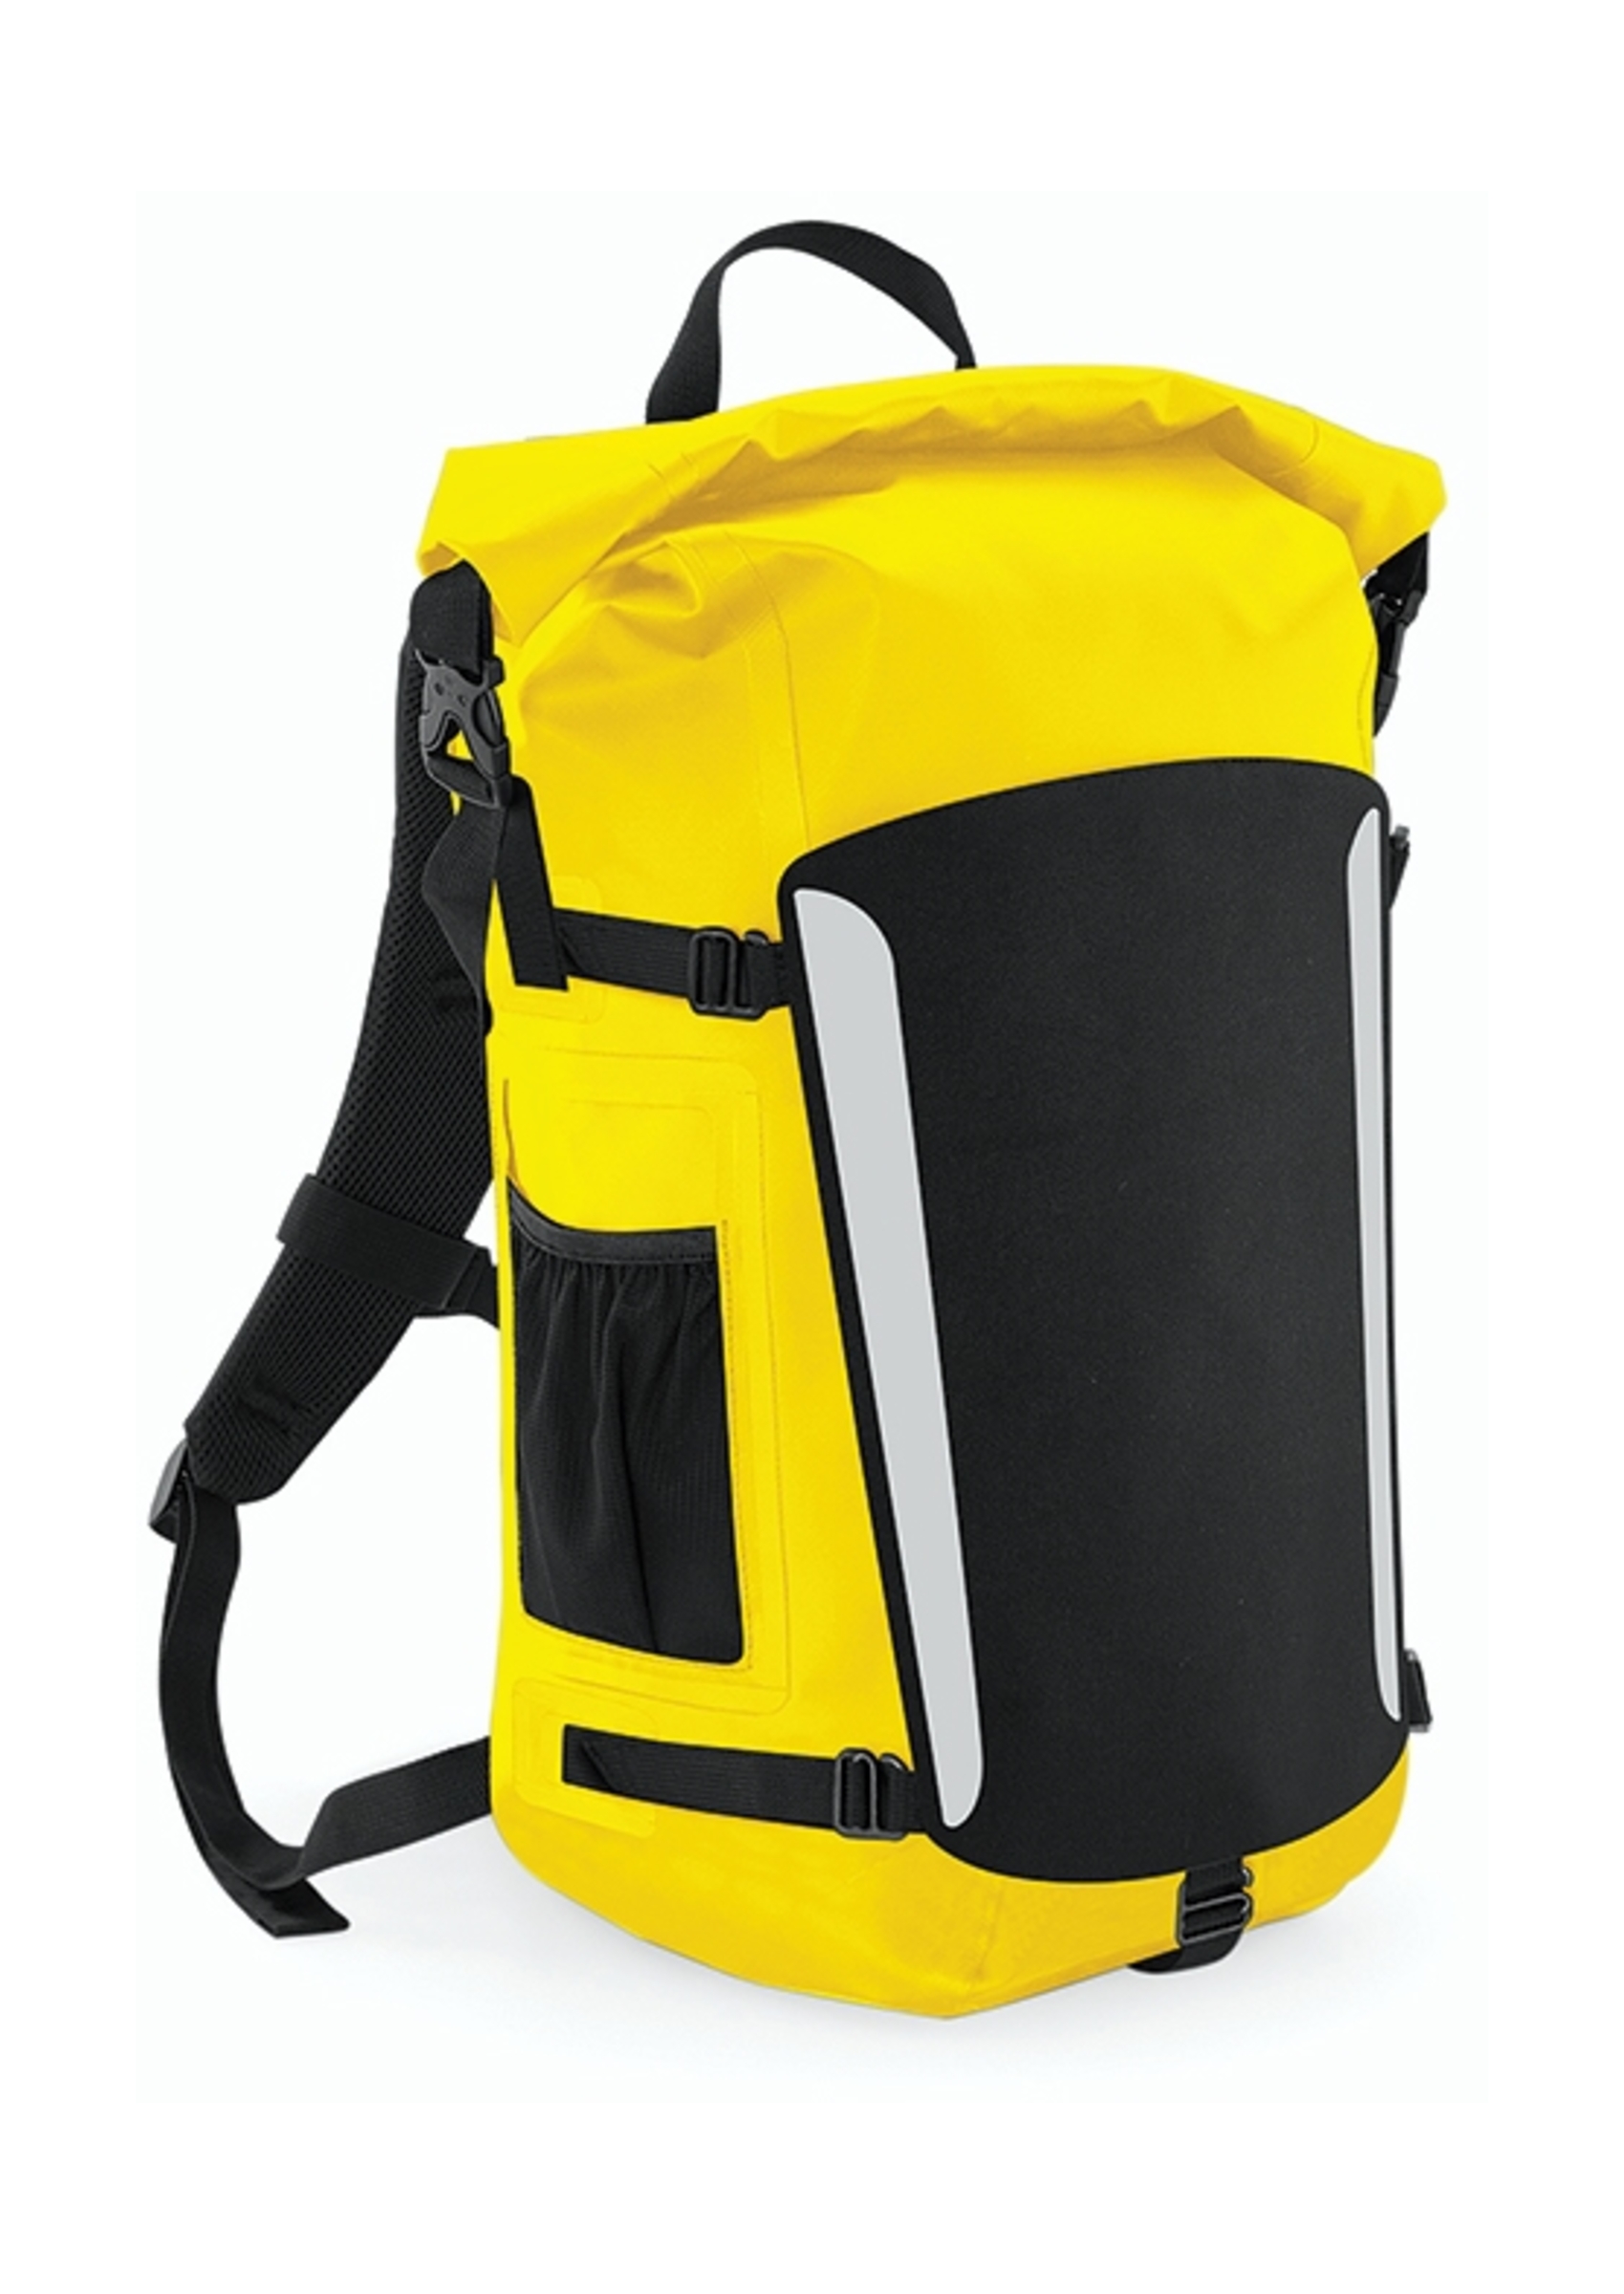 Quadra Slx 25 Litre Waterproof Backpack - Black/Yellow - One Size